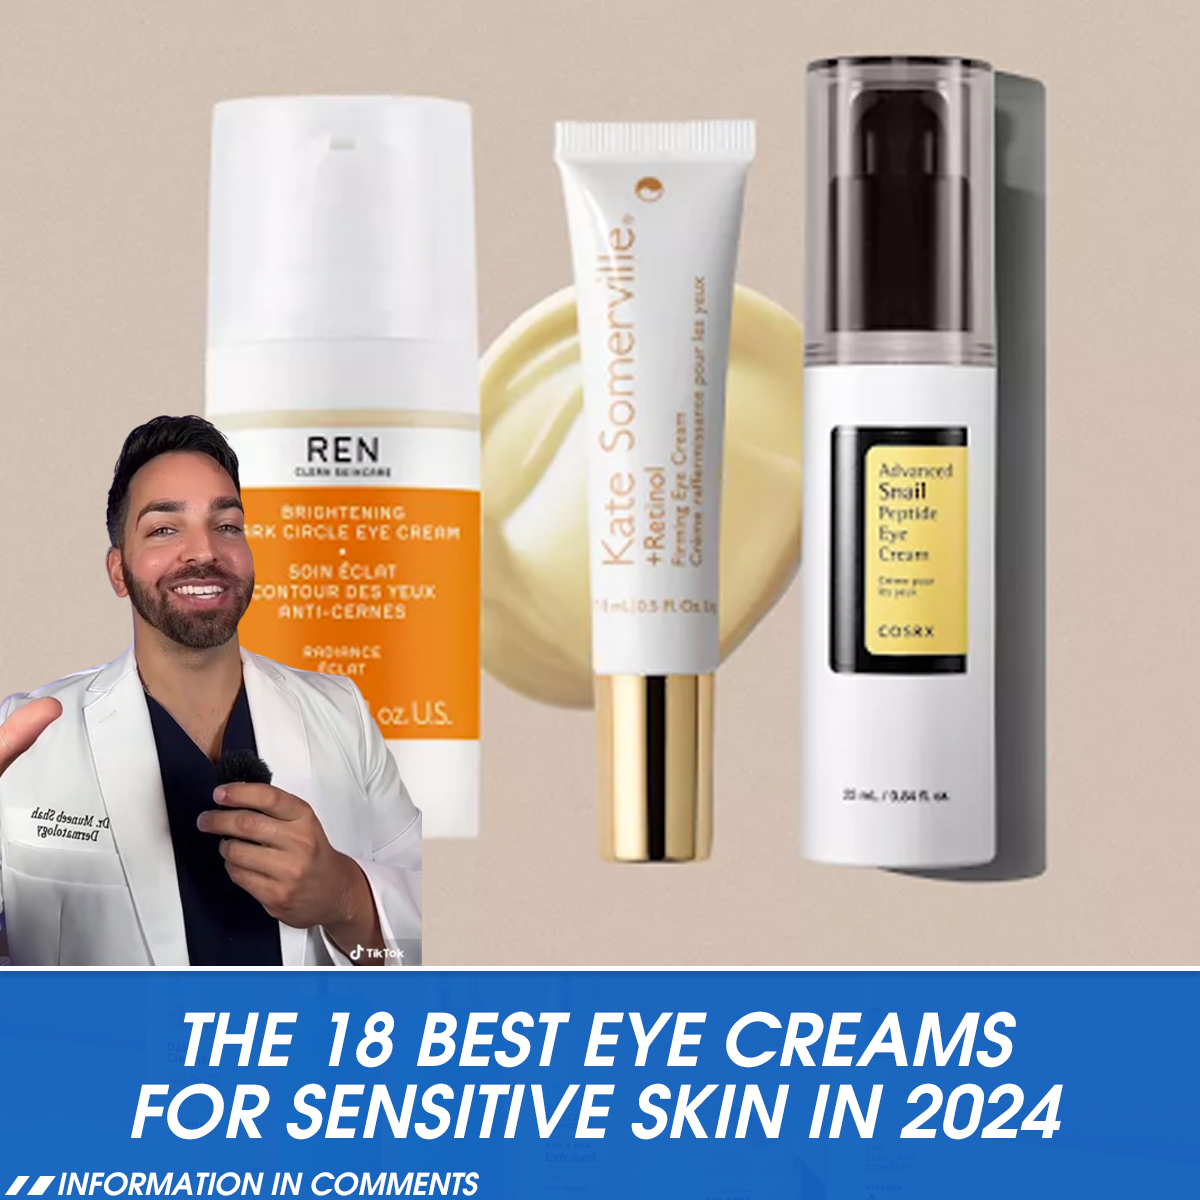 The 18 Best Eye Creams for Sensitive Skin in 2024